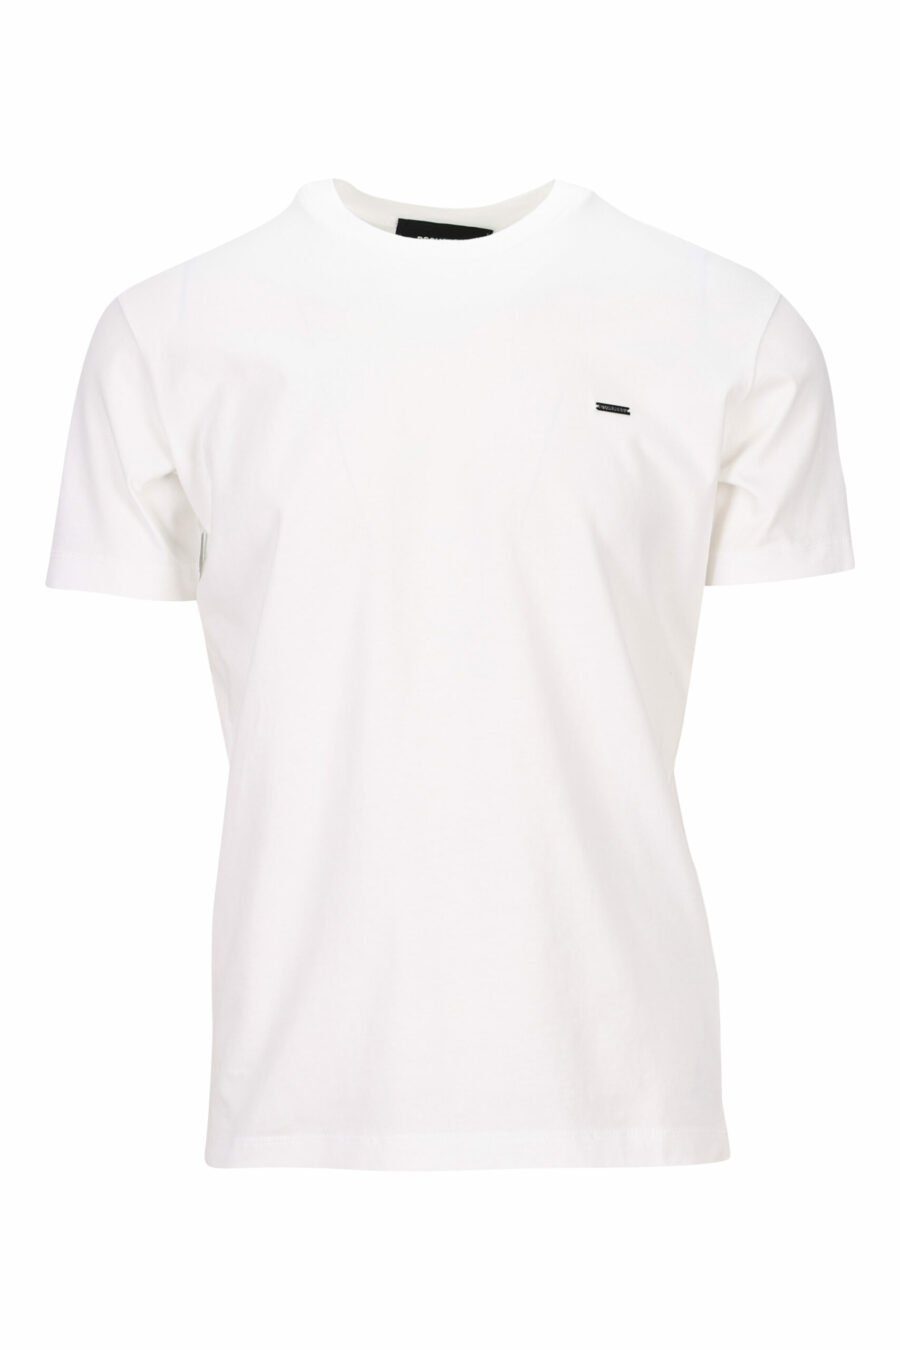 Camiseta blanca con logo en placa pequeña - 8054148404369 scaled